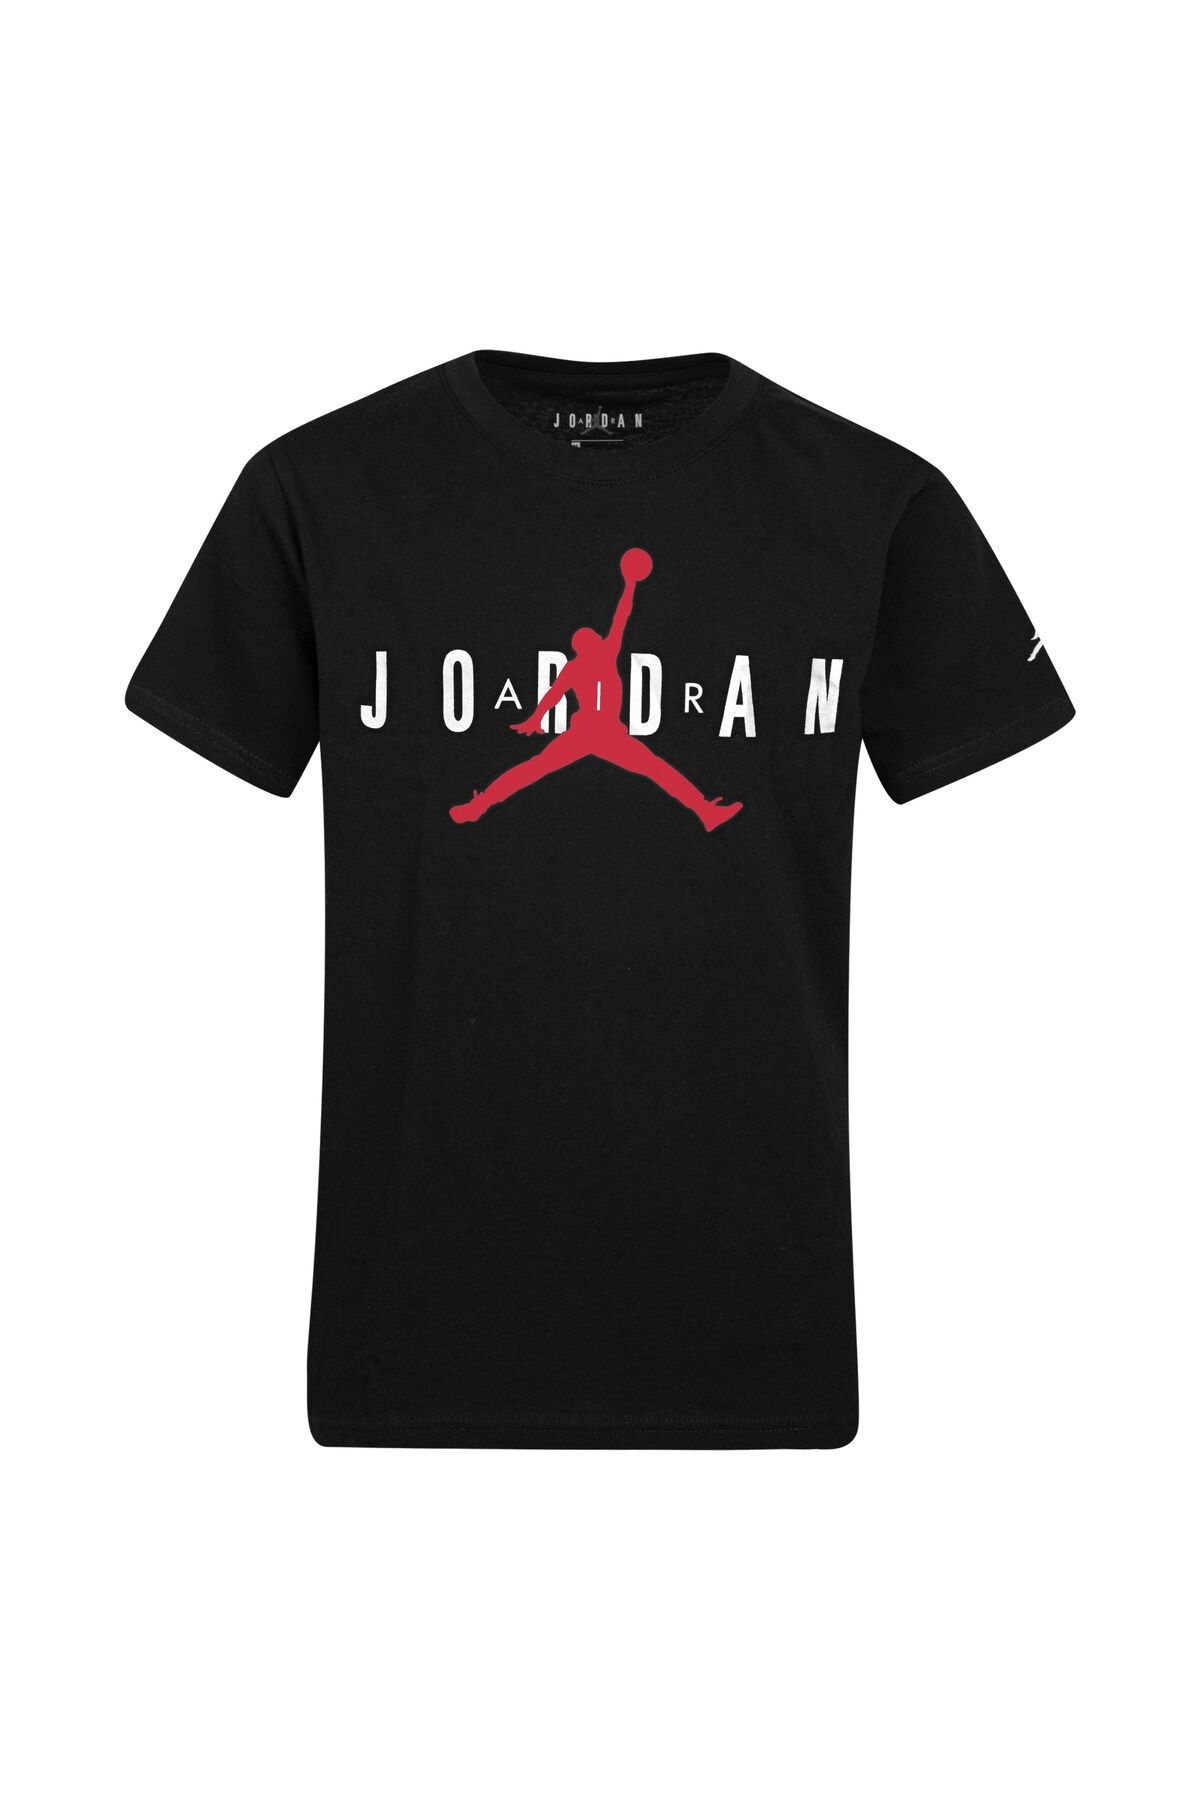 Nike Jordan Brand Tee 5